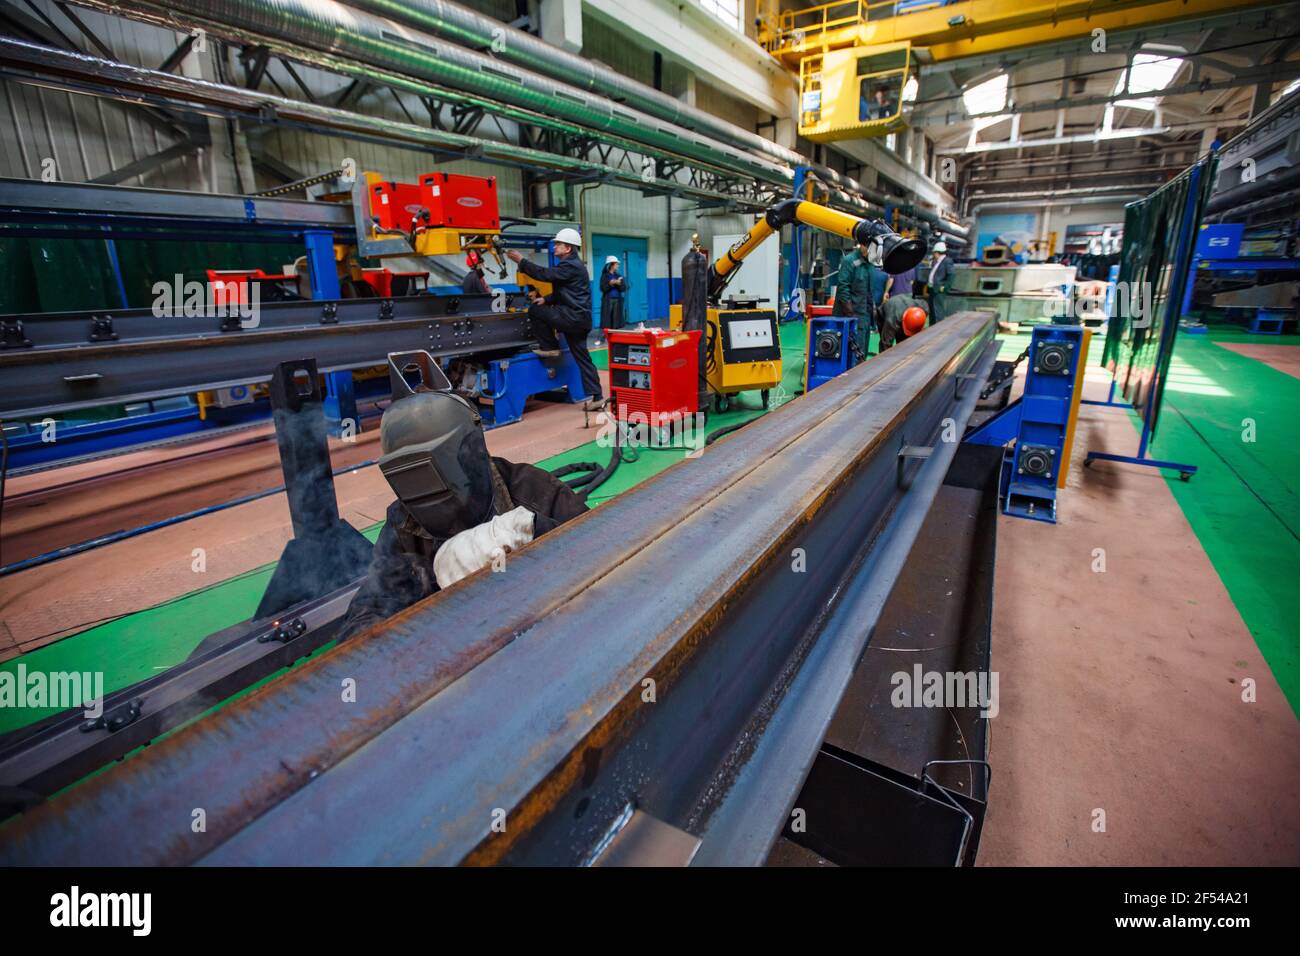 Ekibastuz, Pavlodar region, Kazakhstan: Carriage-building plant. Welding works on large steel part. Stock Photo